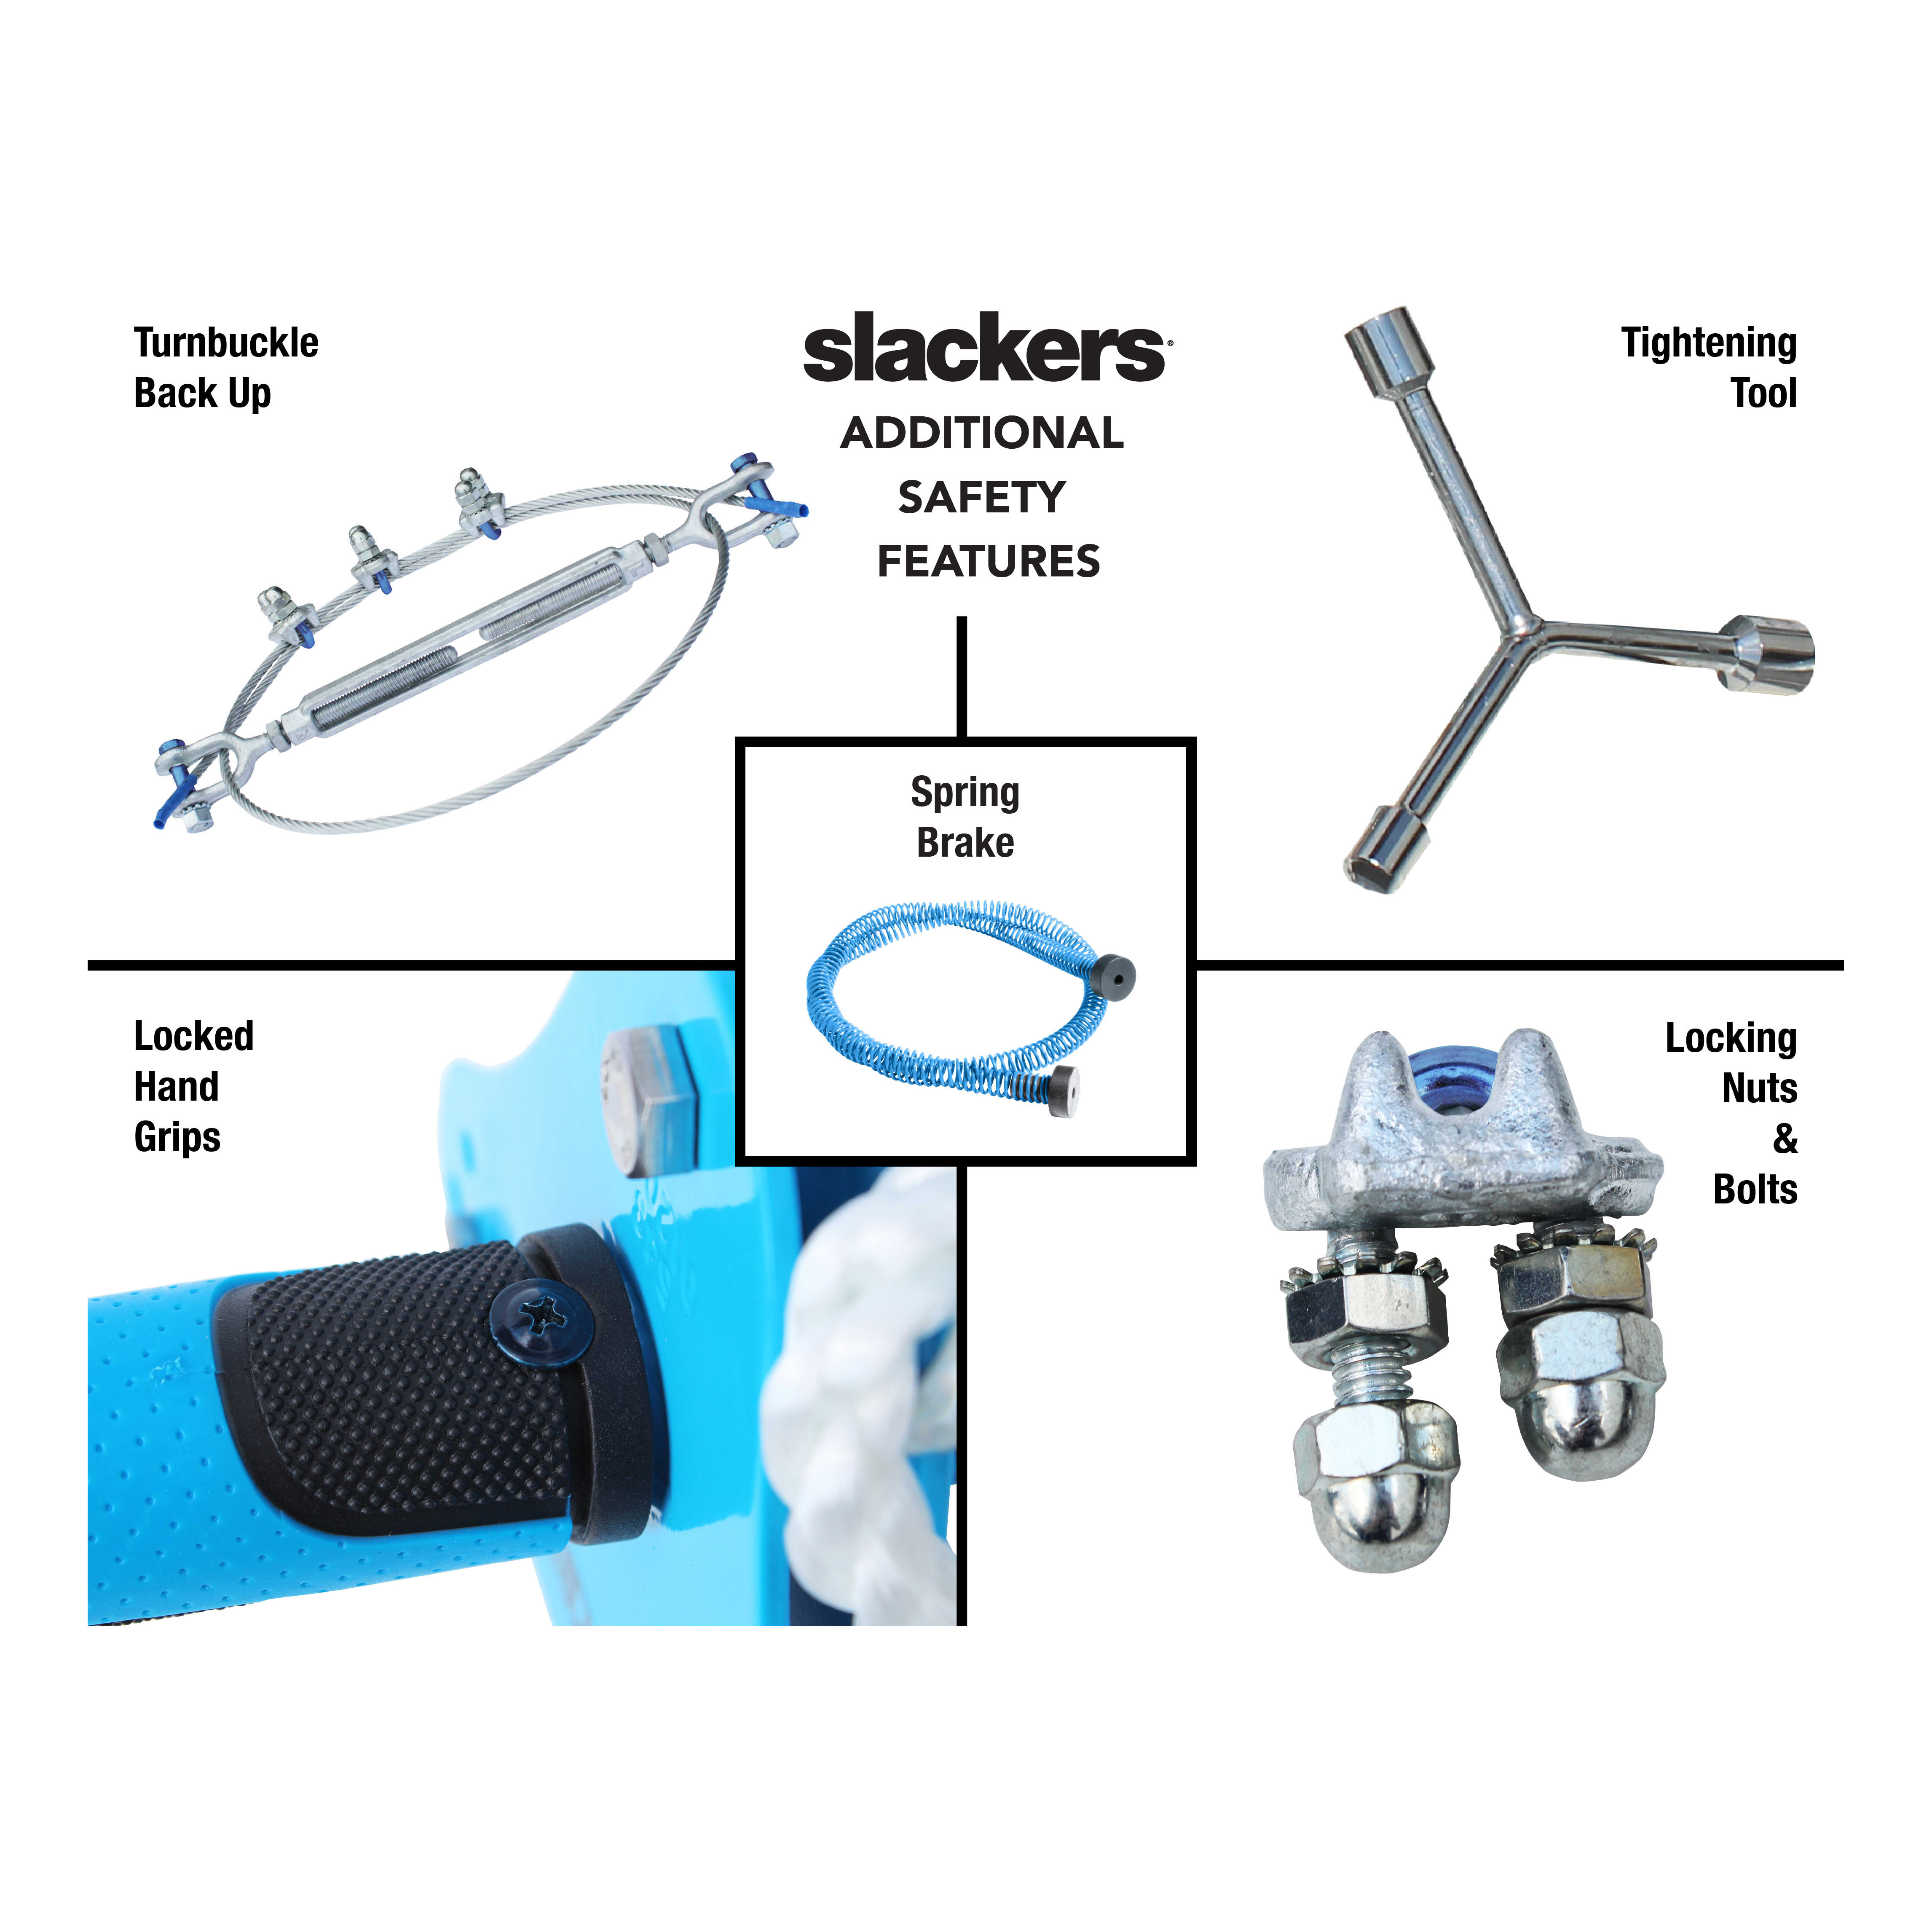 Slacker Zip Line Kits - Hawk Series - Safety Features